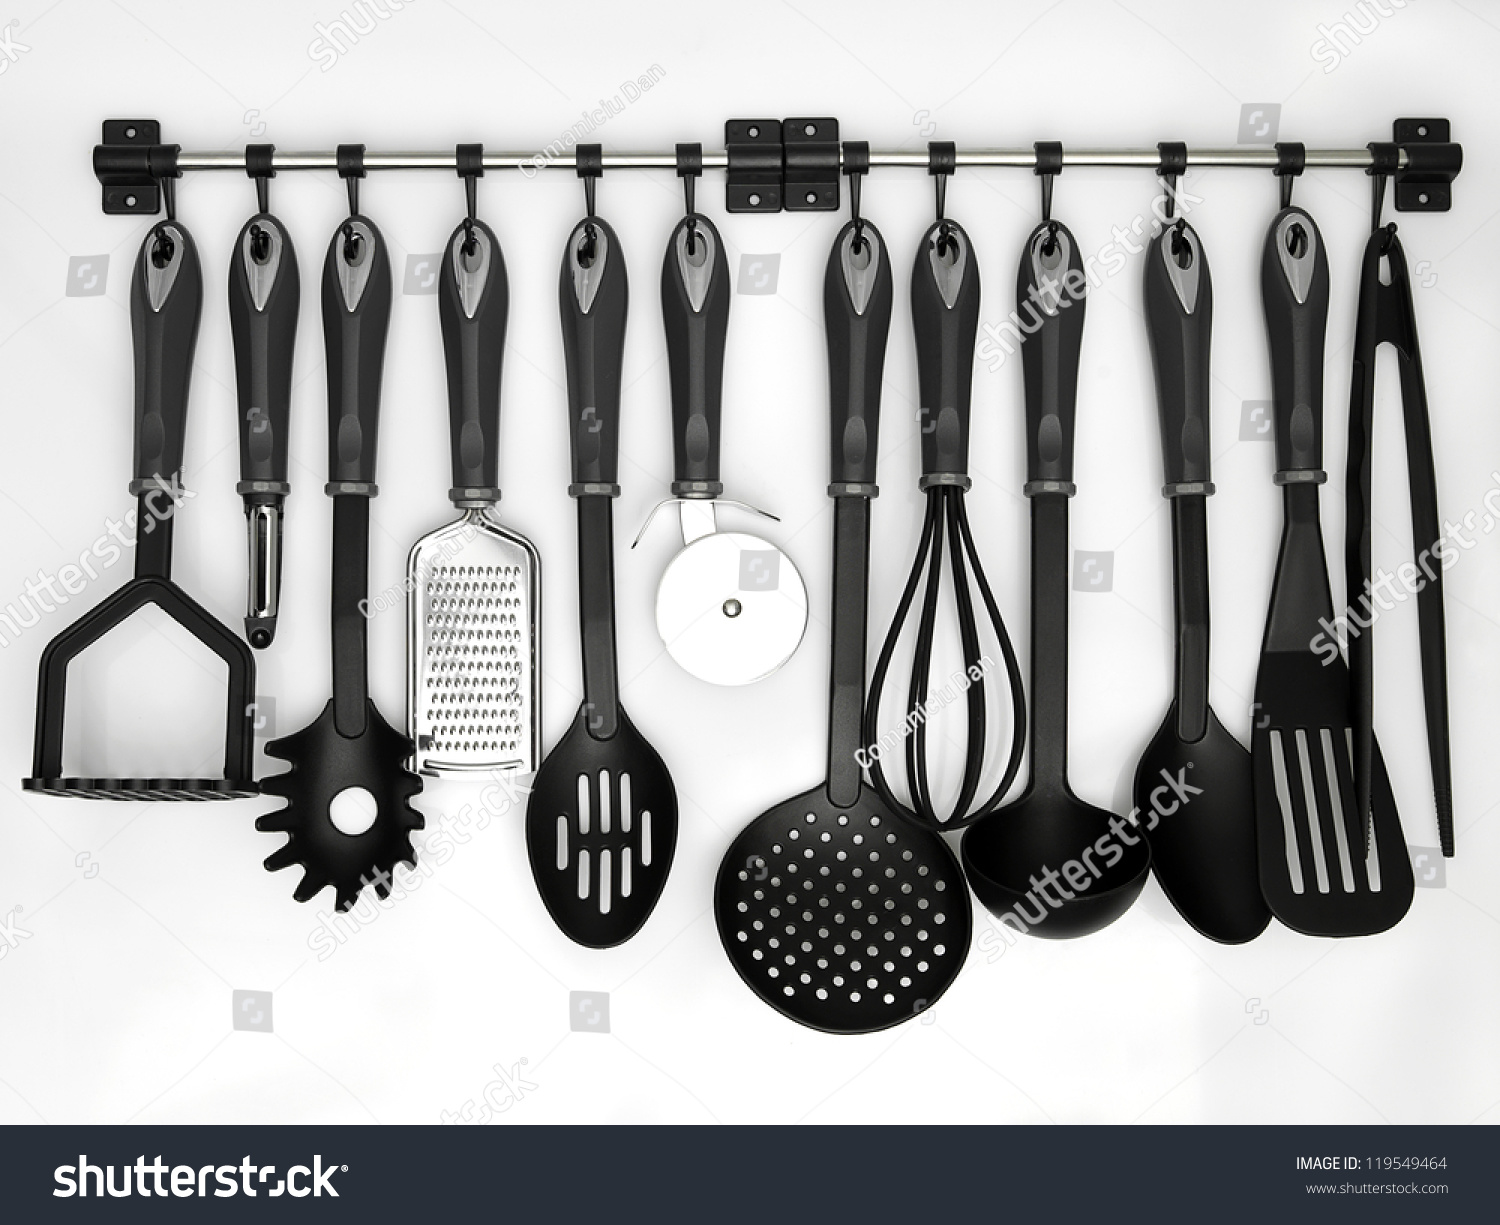 stock-photo-kitchen-utensils-hanging-white-background-119549464.jpg